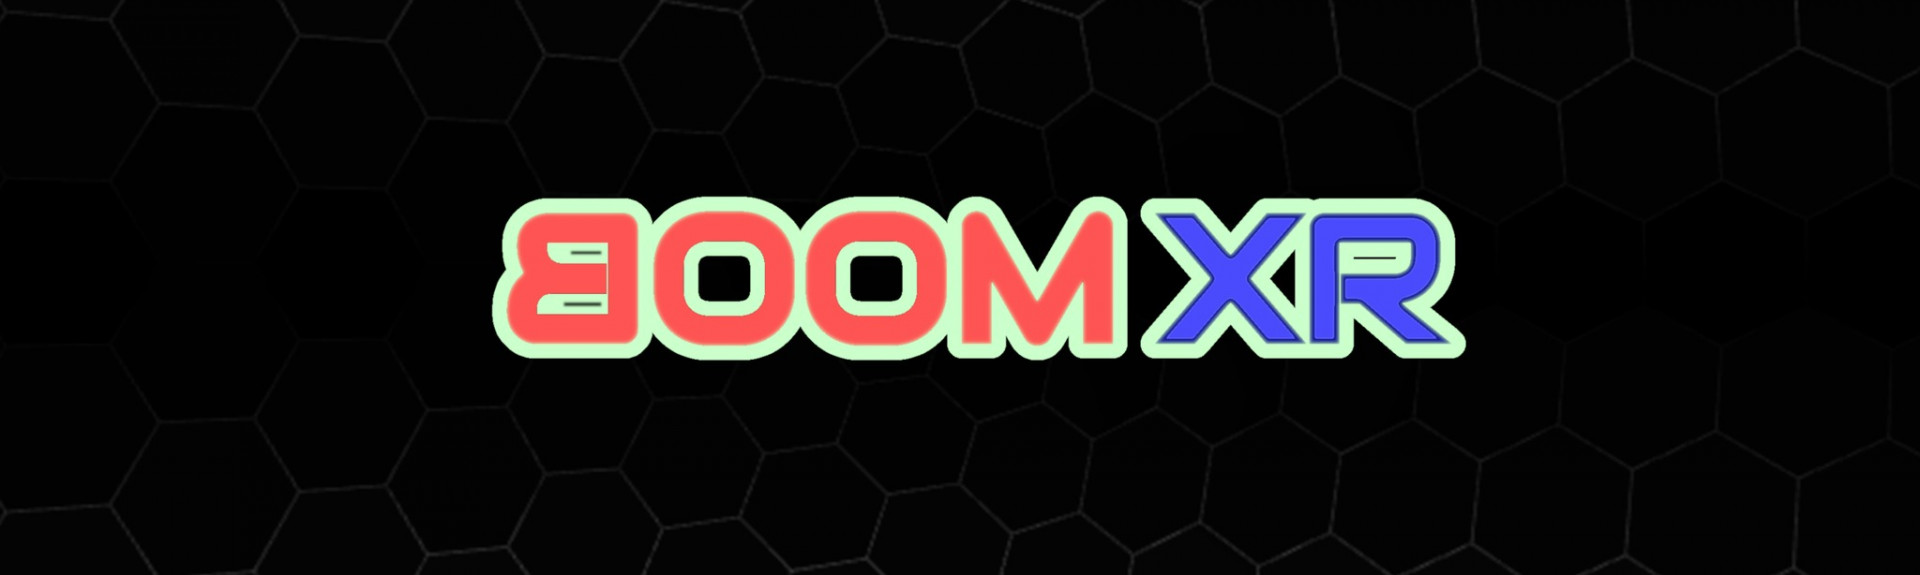 BoomXR